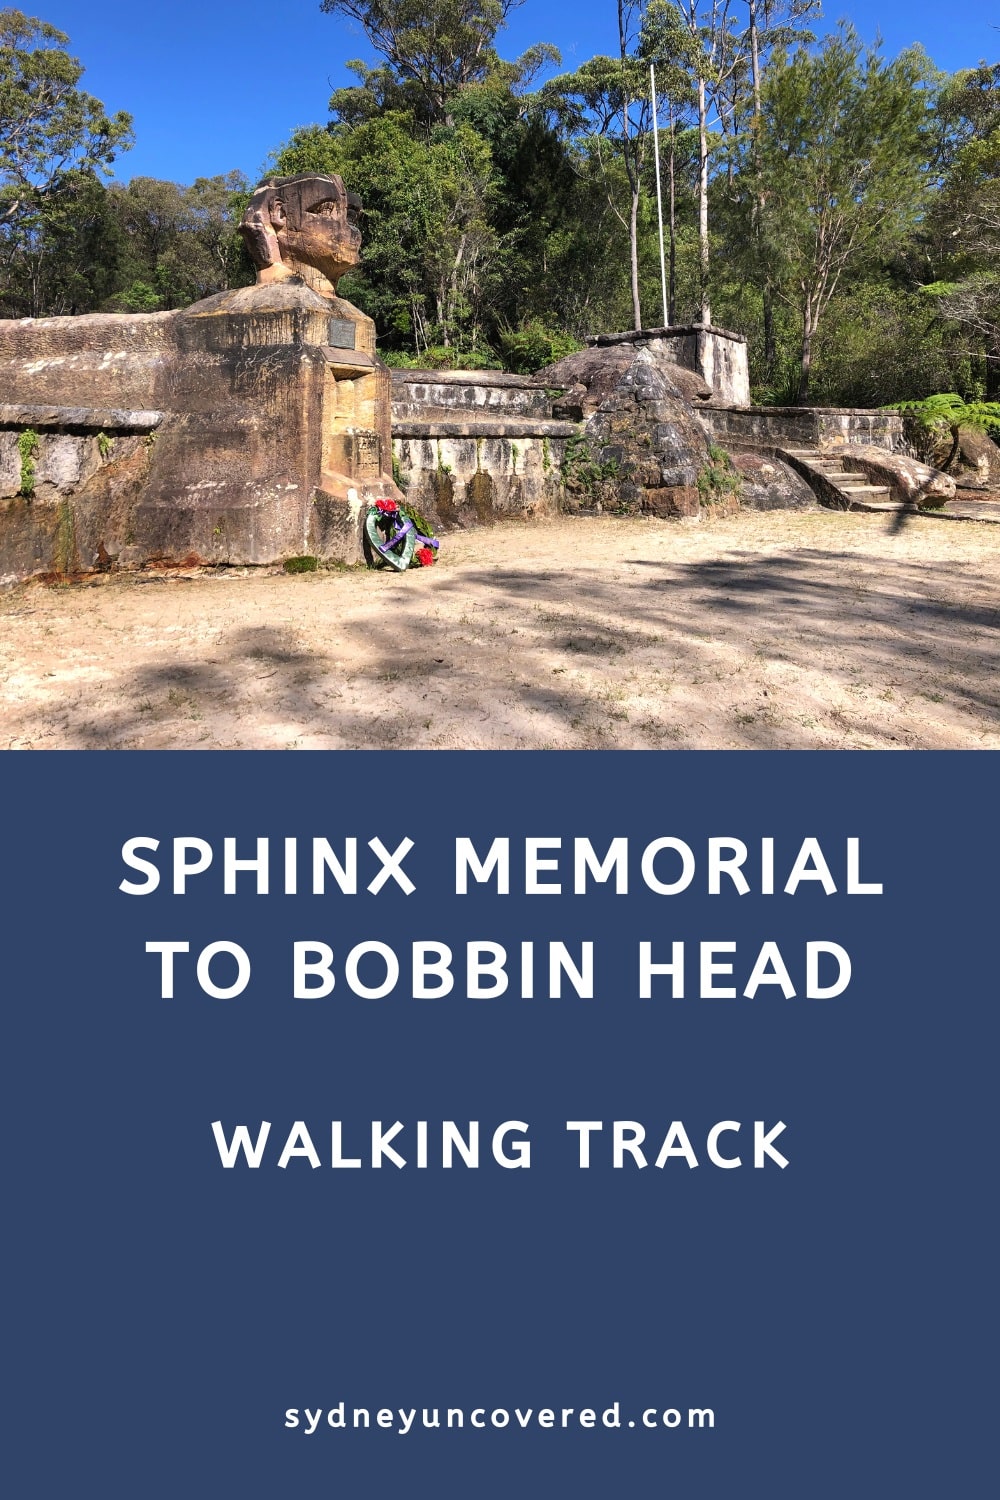 Sphinx Memorial to Bobbin Head loop (via Warrimoo Track)